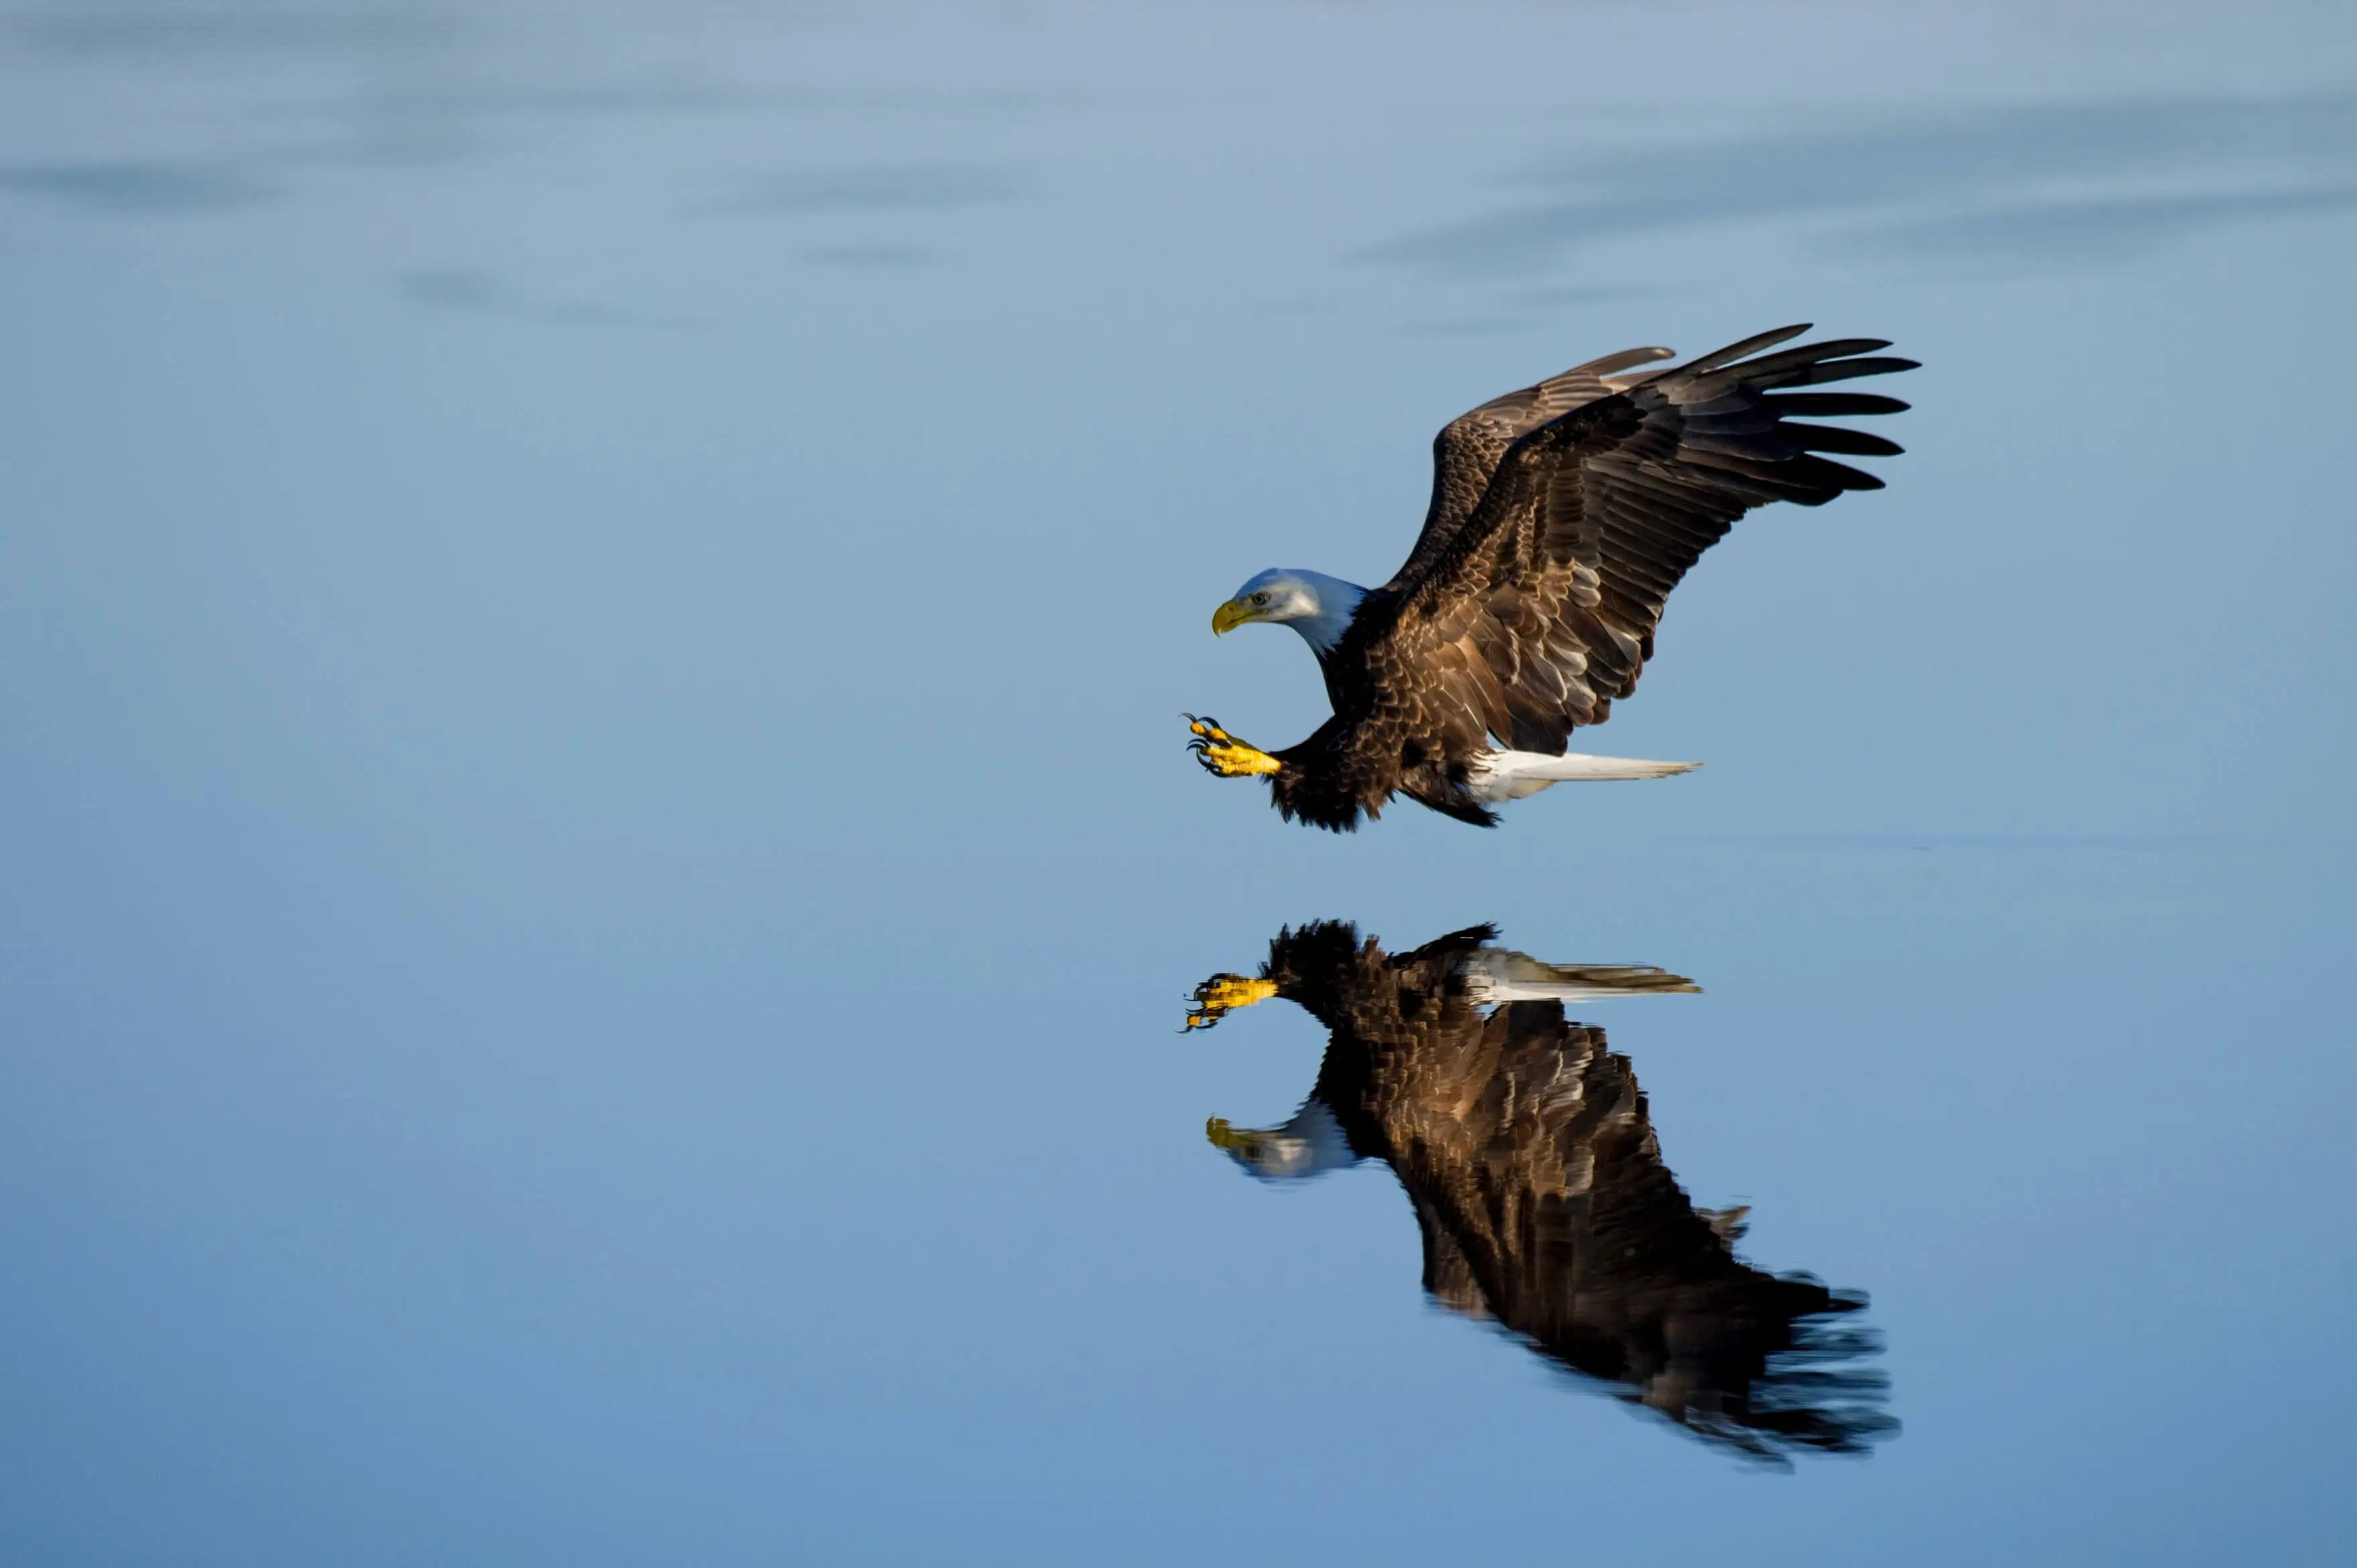 Bald eagle gliding over a lake.